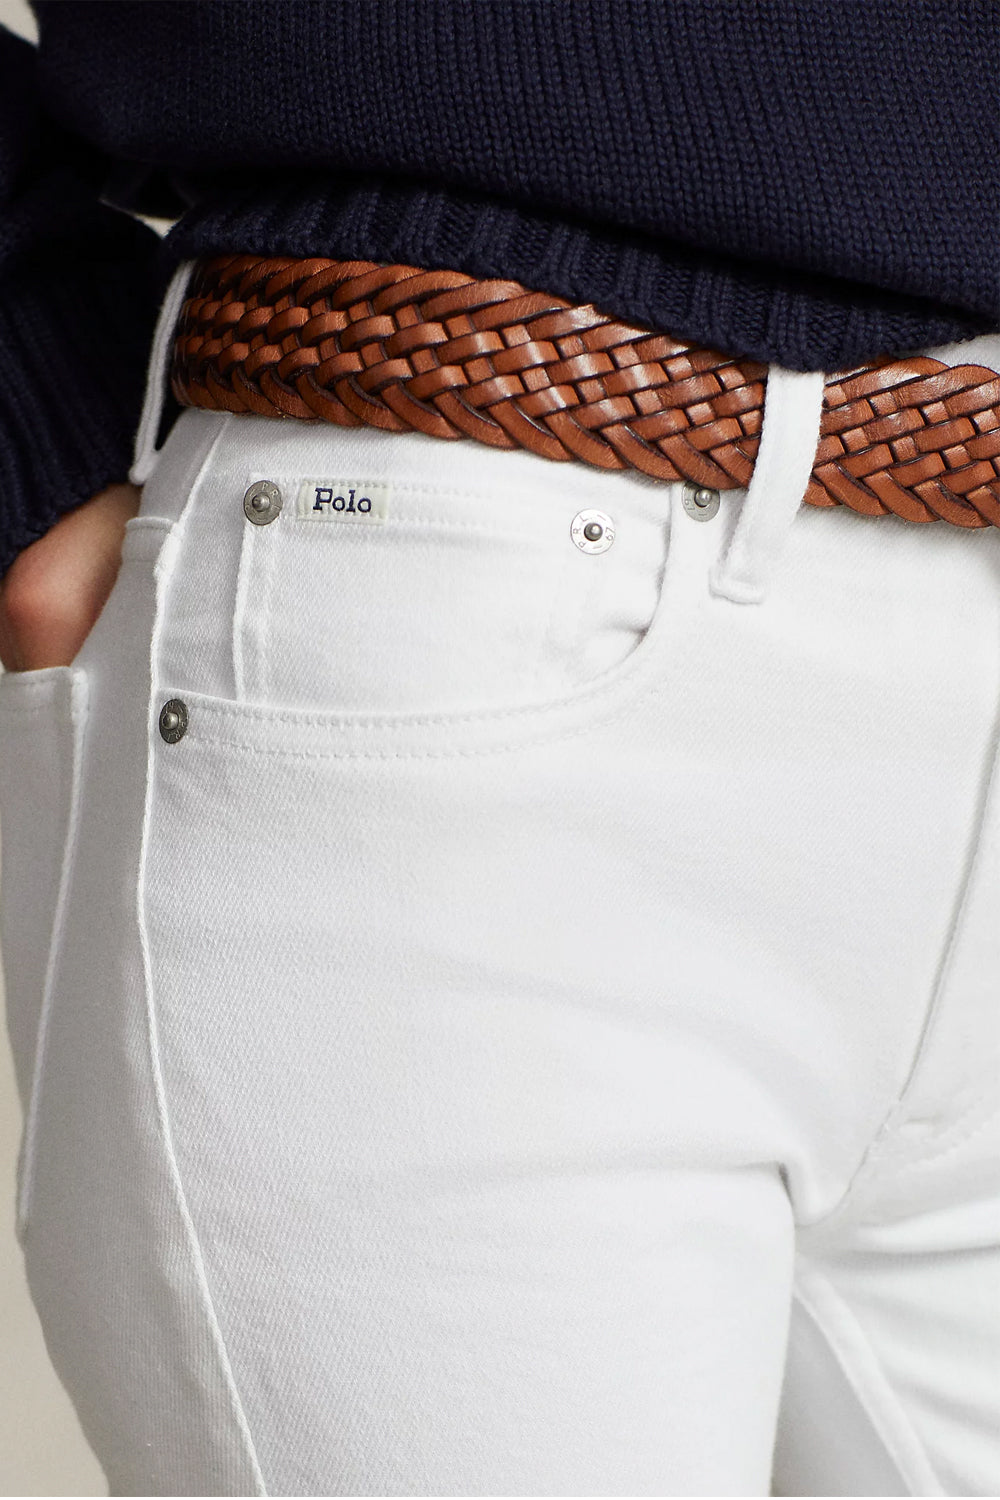 POLO RALPH LAUREN Jeans Super Slim-Fit a vita media